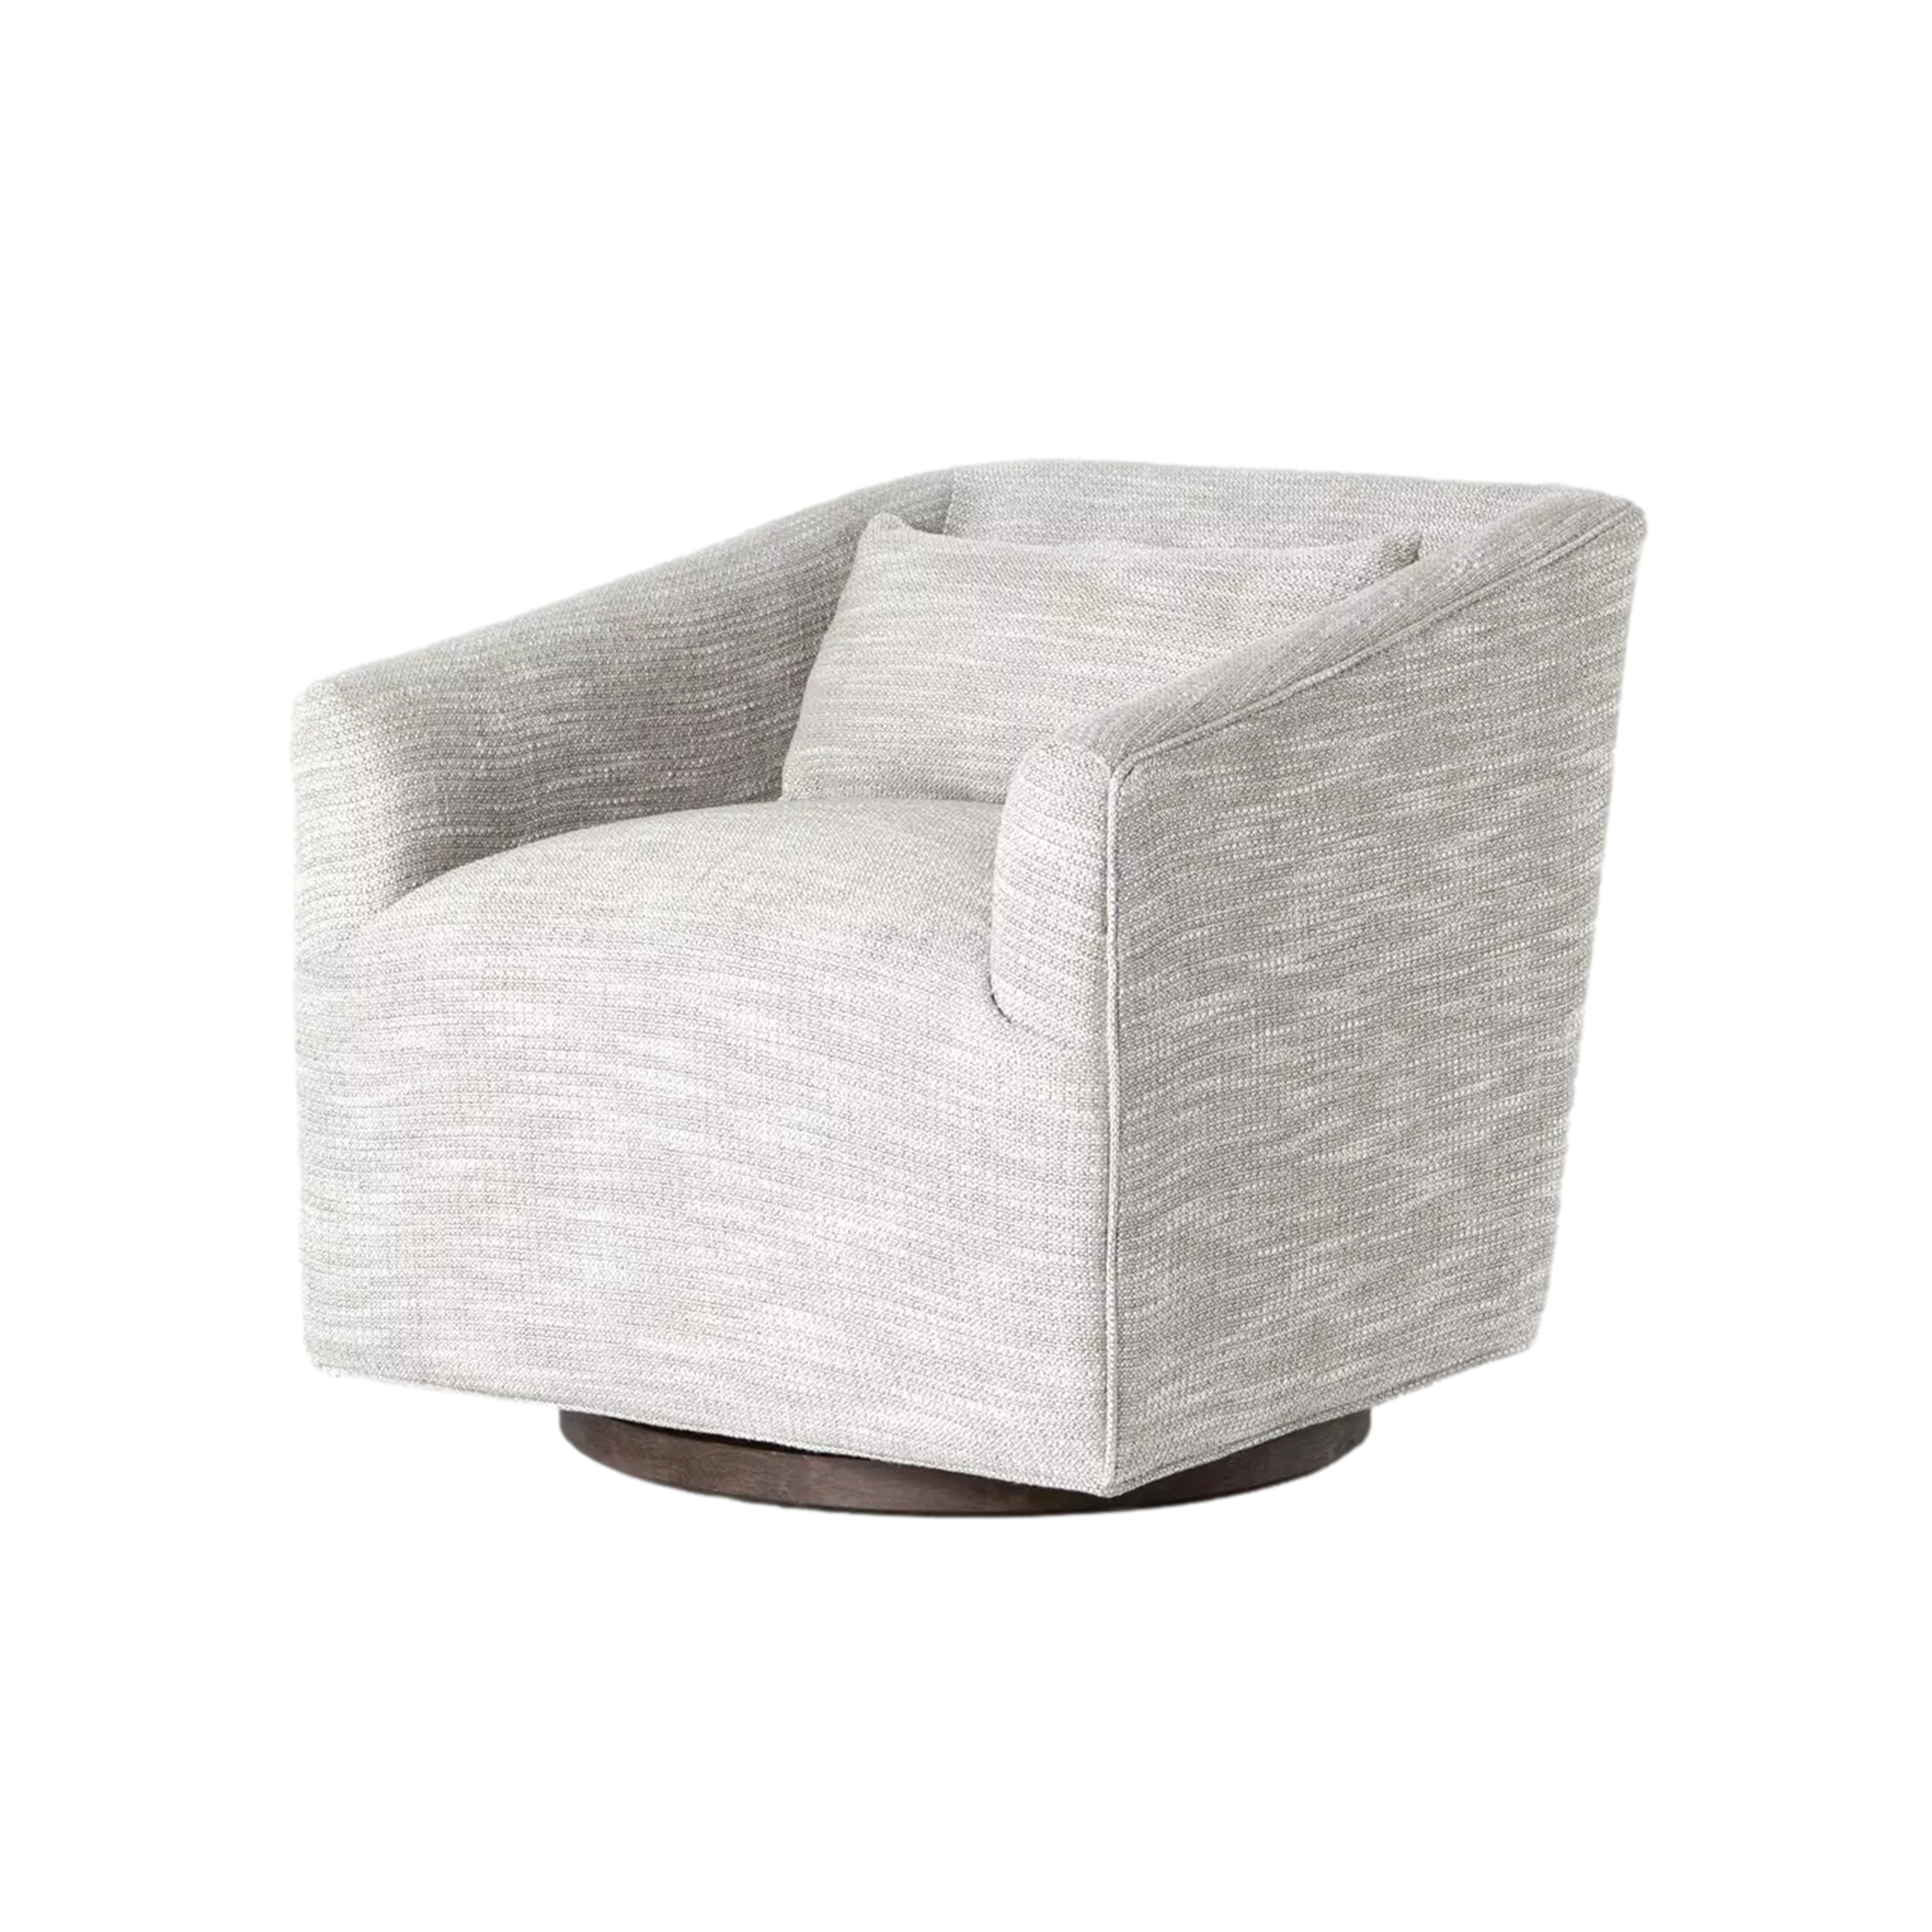 Delaney Swivel Chair (Grey)